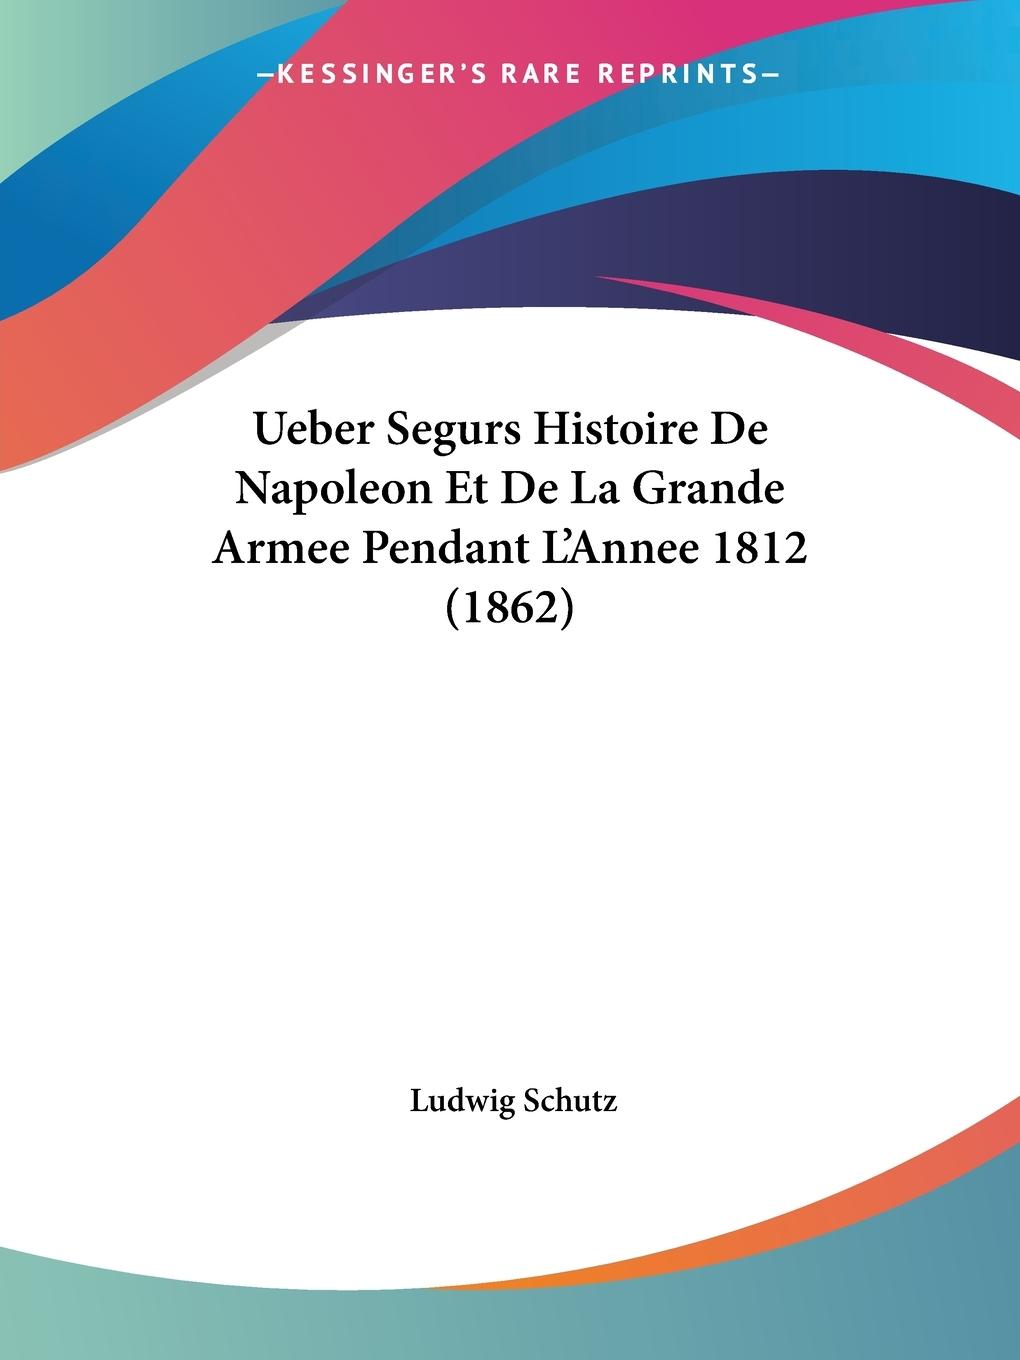 Ueber Segurs Histoire De Napoleon Et De La Grande Armee Pendant L Annee 1812 (1862) - Schutz, Ludwig